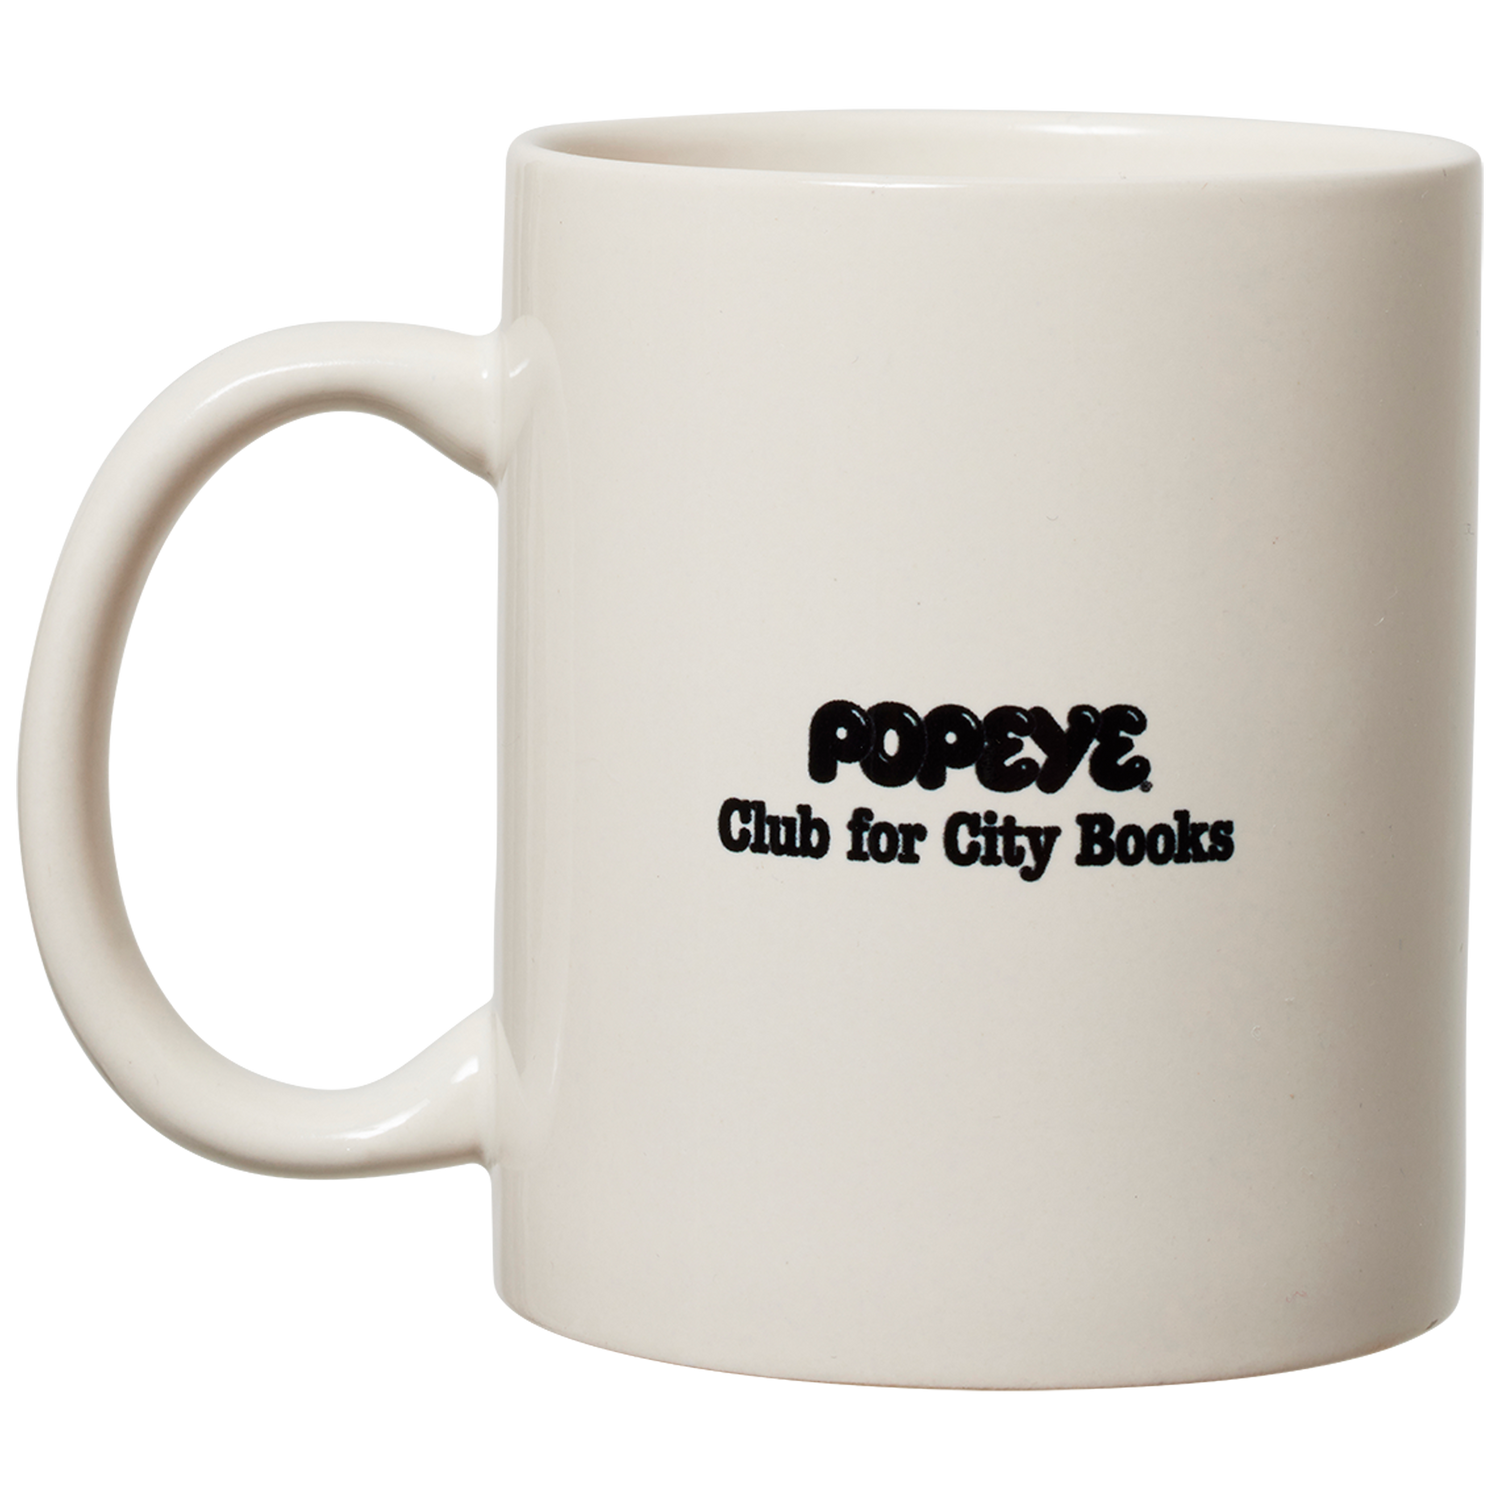 POPEYE BOOK CLUB Mug Cup